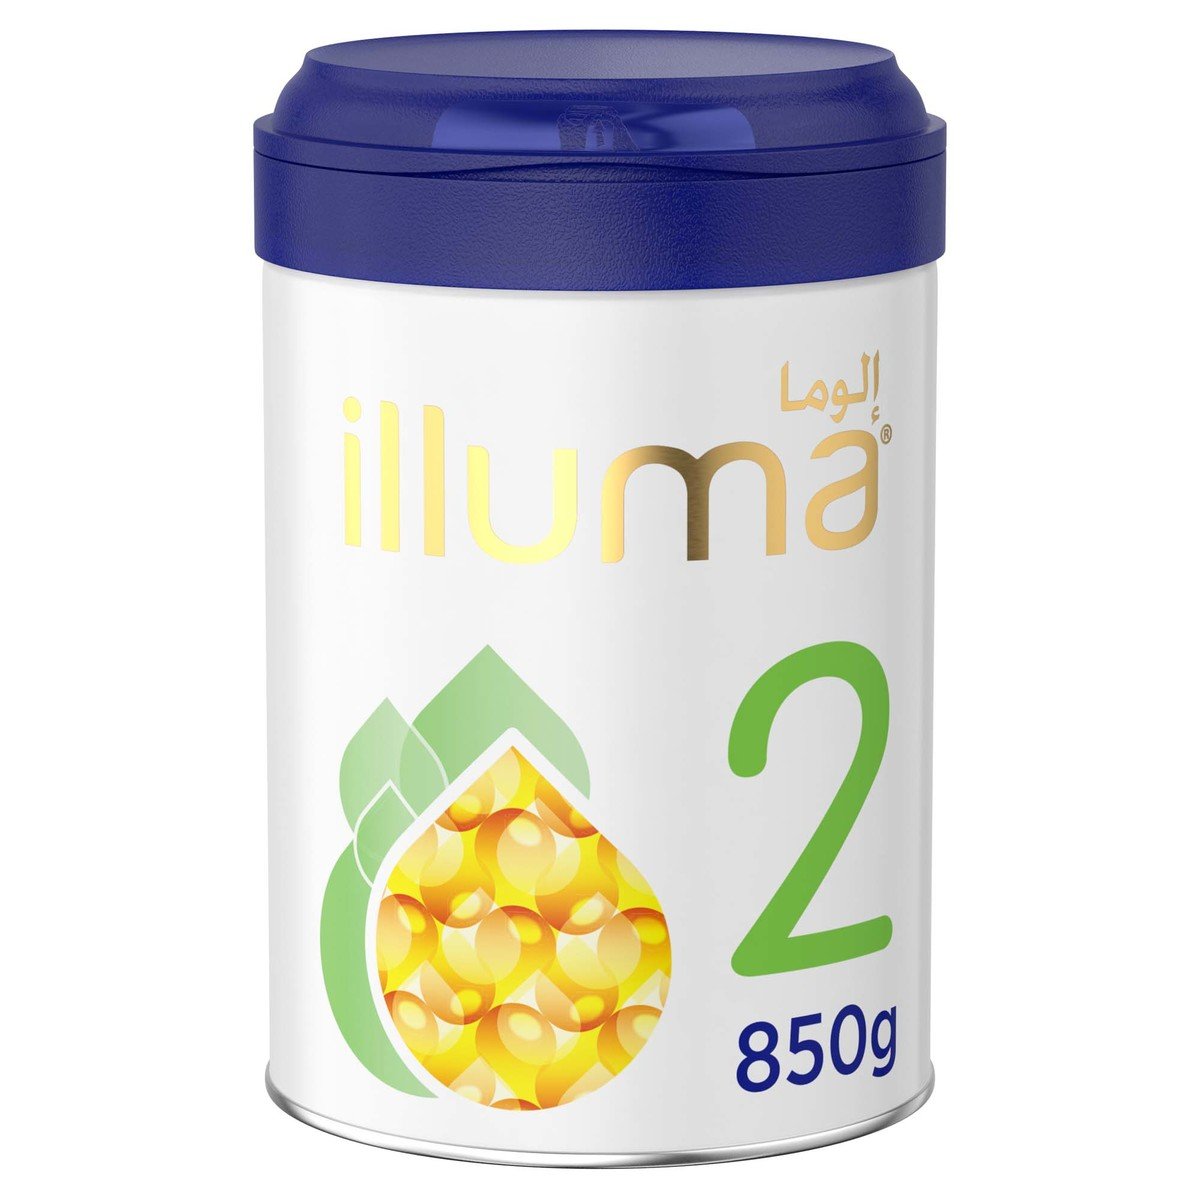 Illuma HMO Follow On Formula Stage 2 From 6-12 Months 850 g